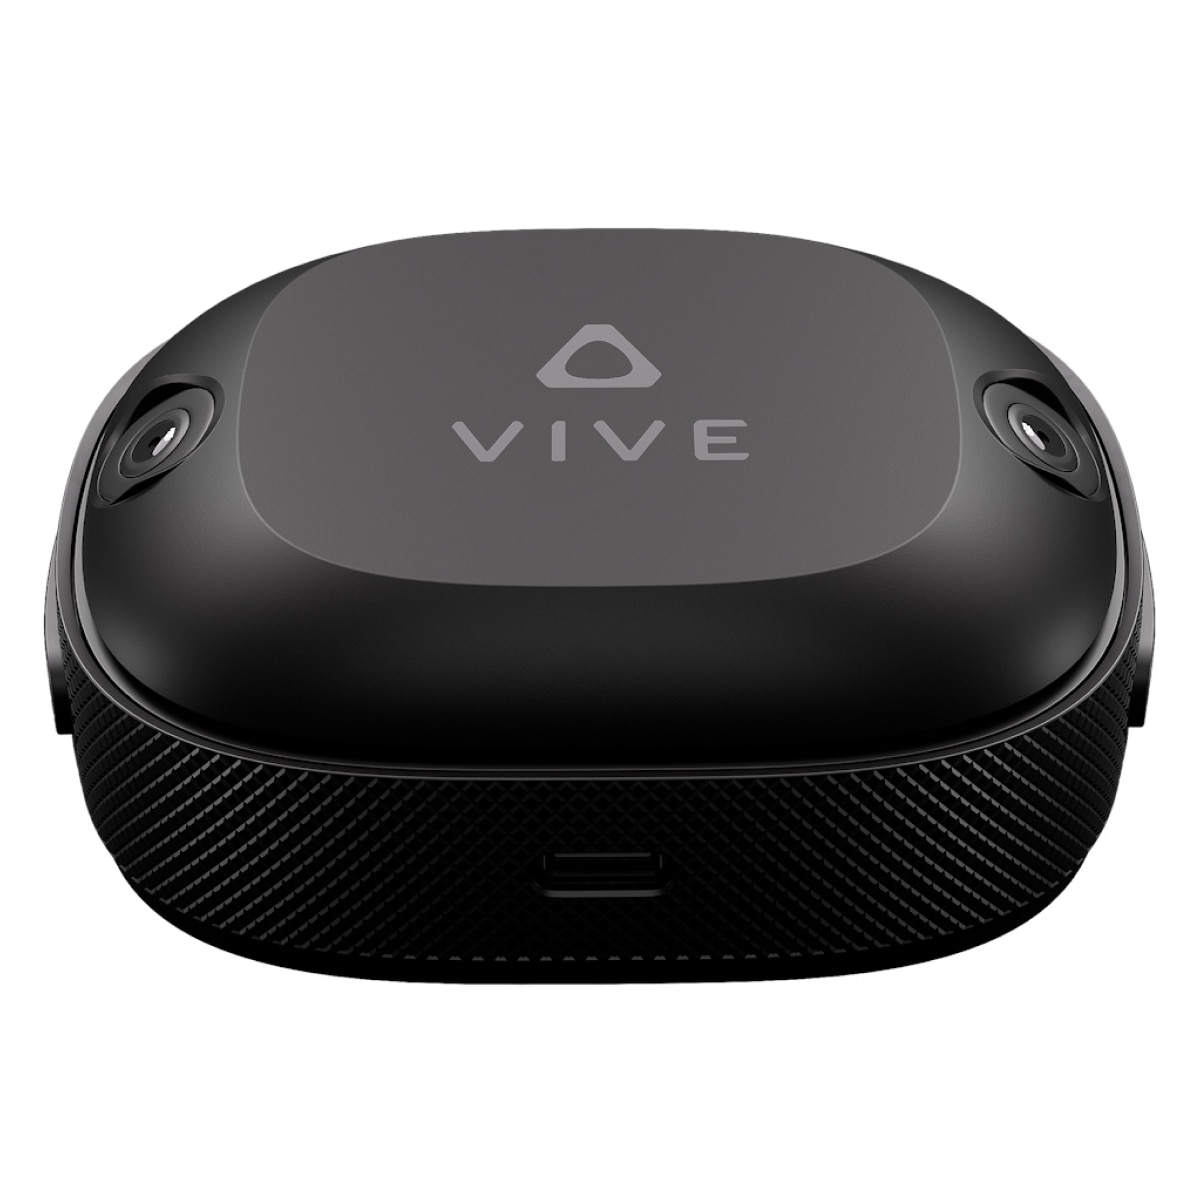 VIVE Ultimate Tracker - Full-Body Tracking for Standalone VR